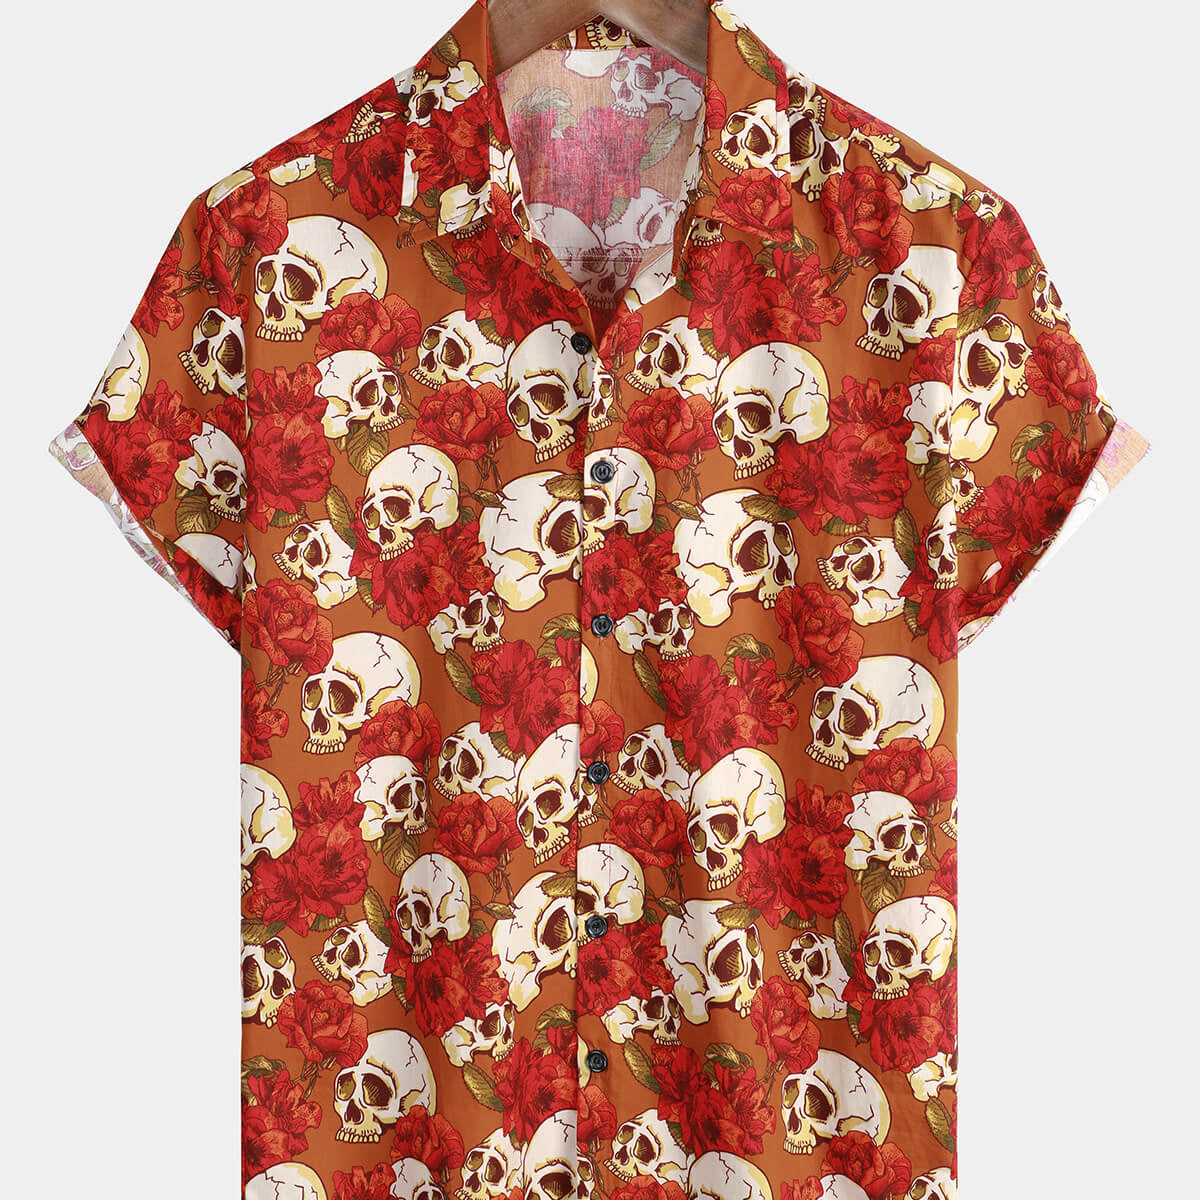 Men's Skull Button Up Red Summer Holiday Short Sleeve Cool Shirt